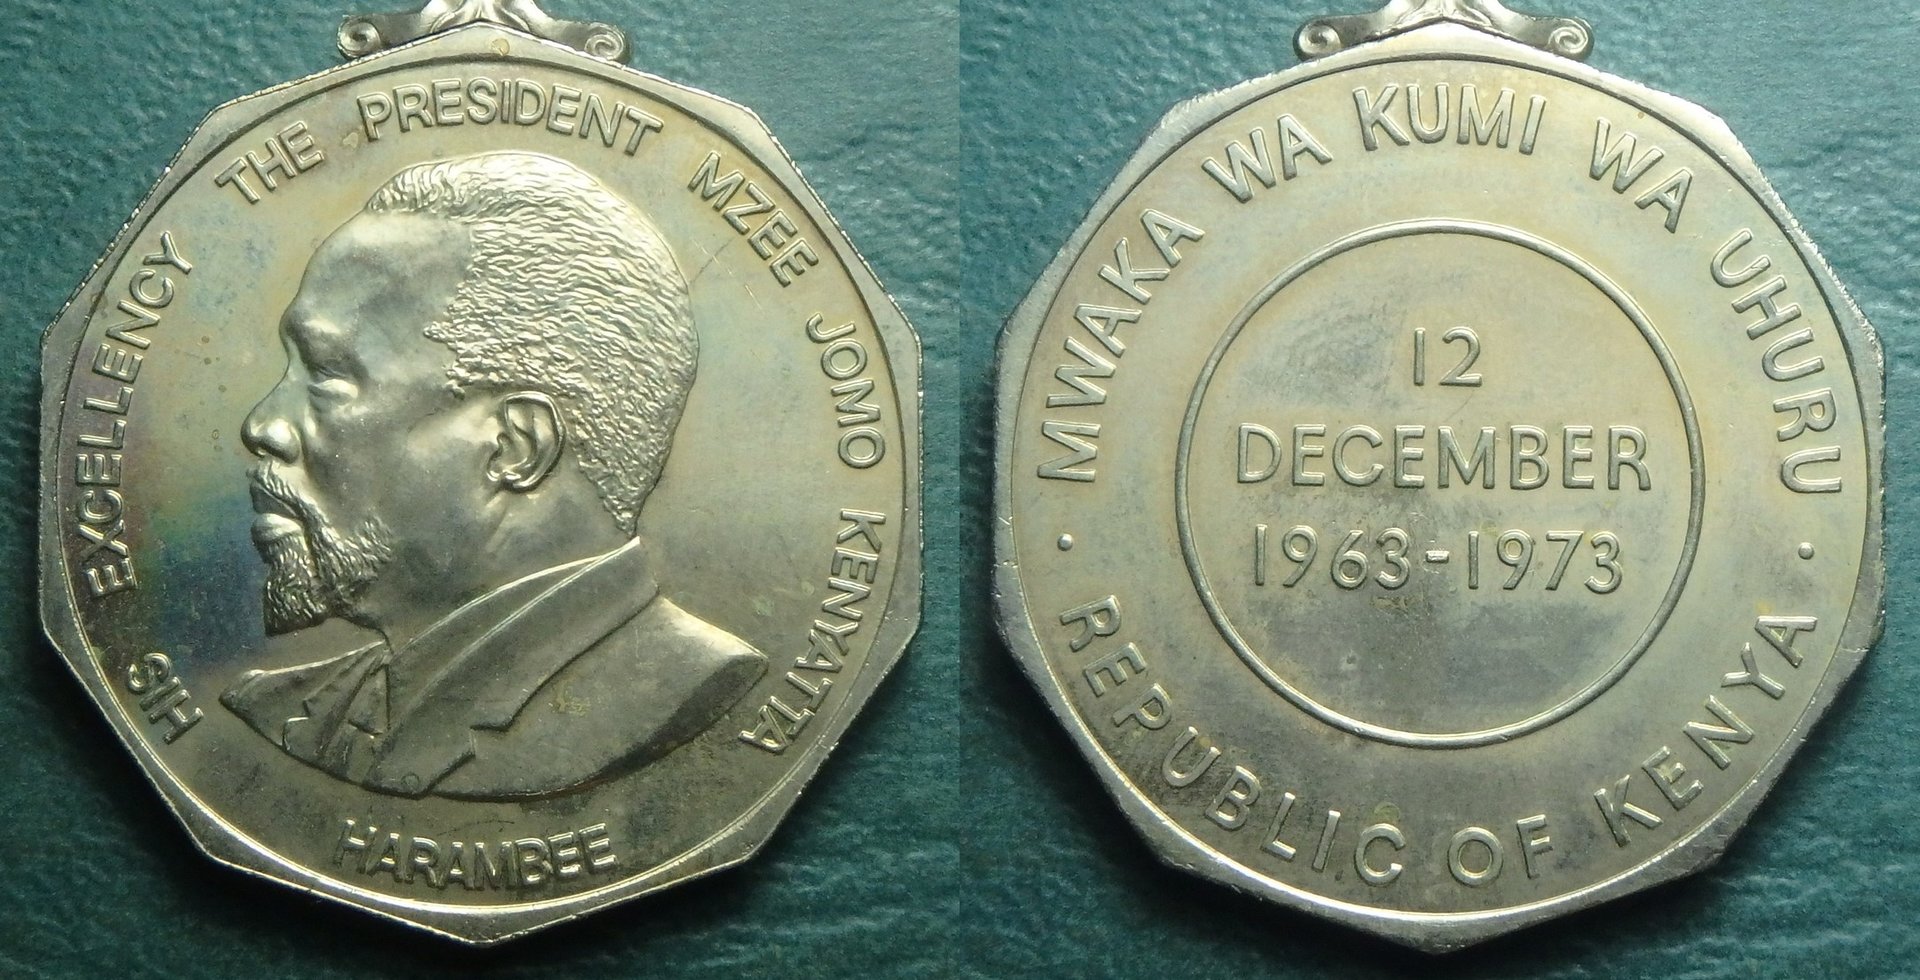 1973 Kenya Medal.jpg